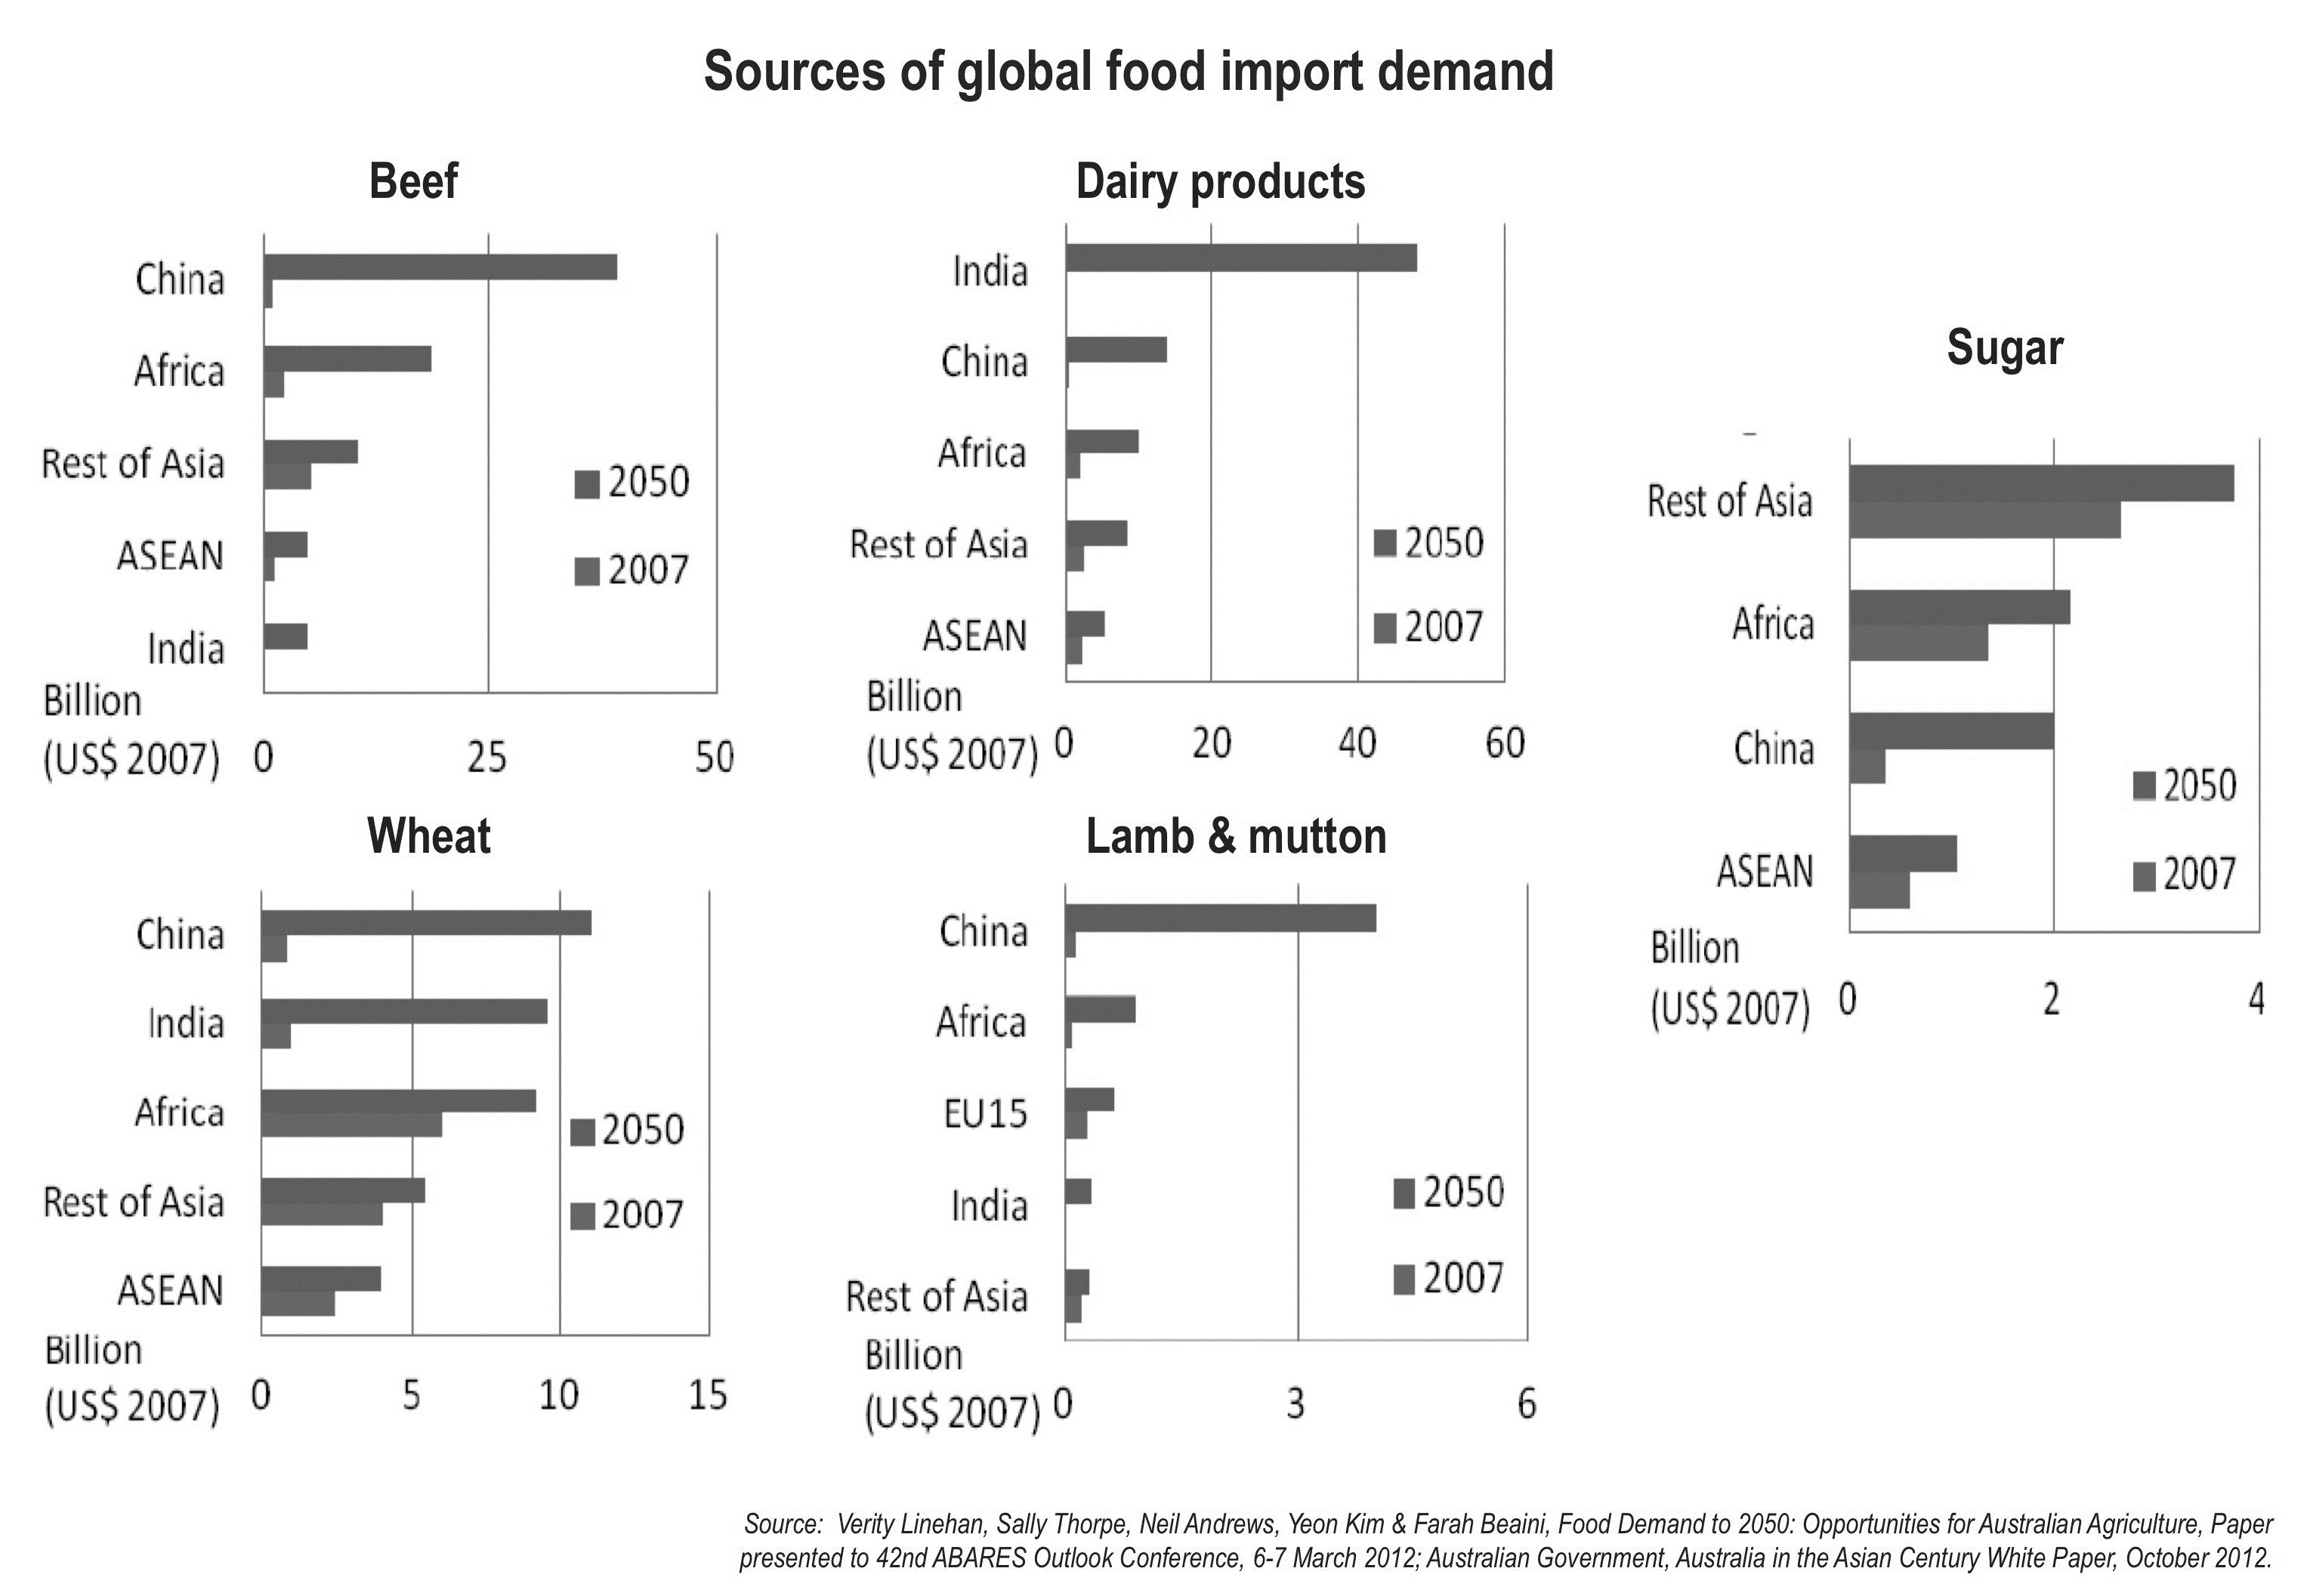 Figure 30: Sources of global food import demand.